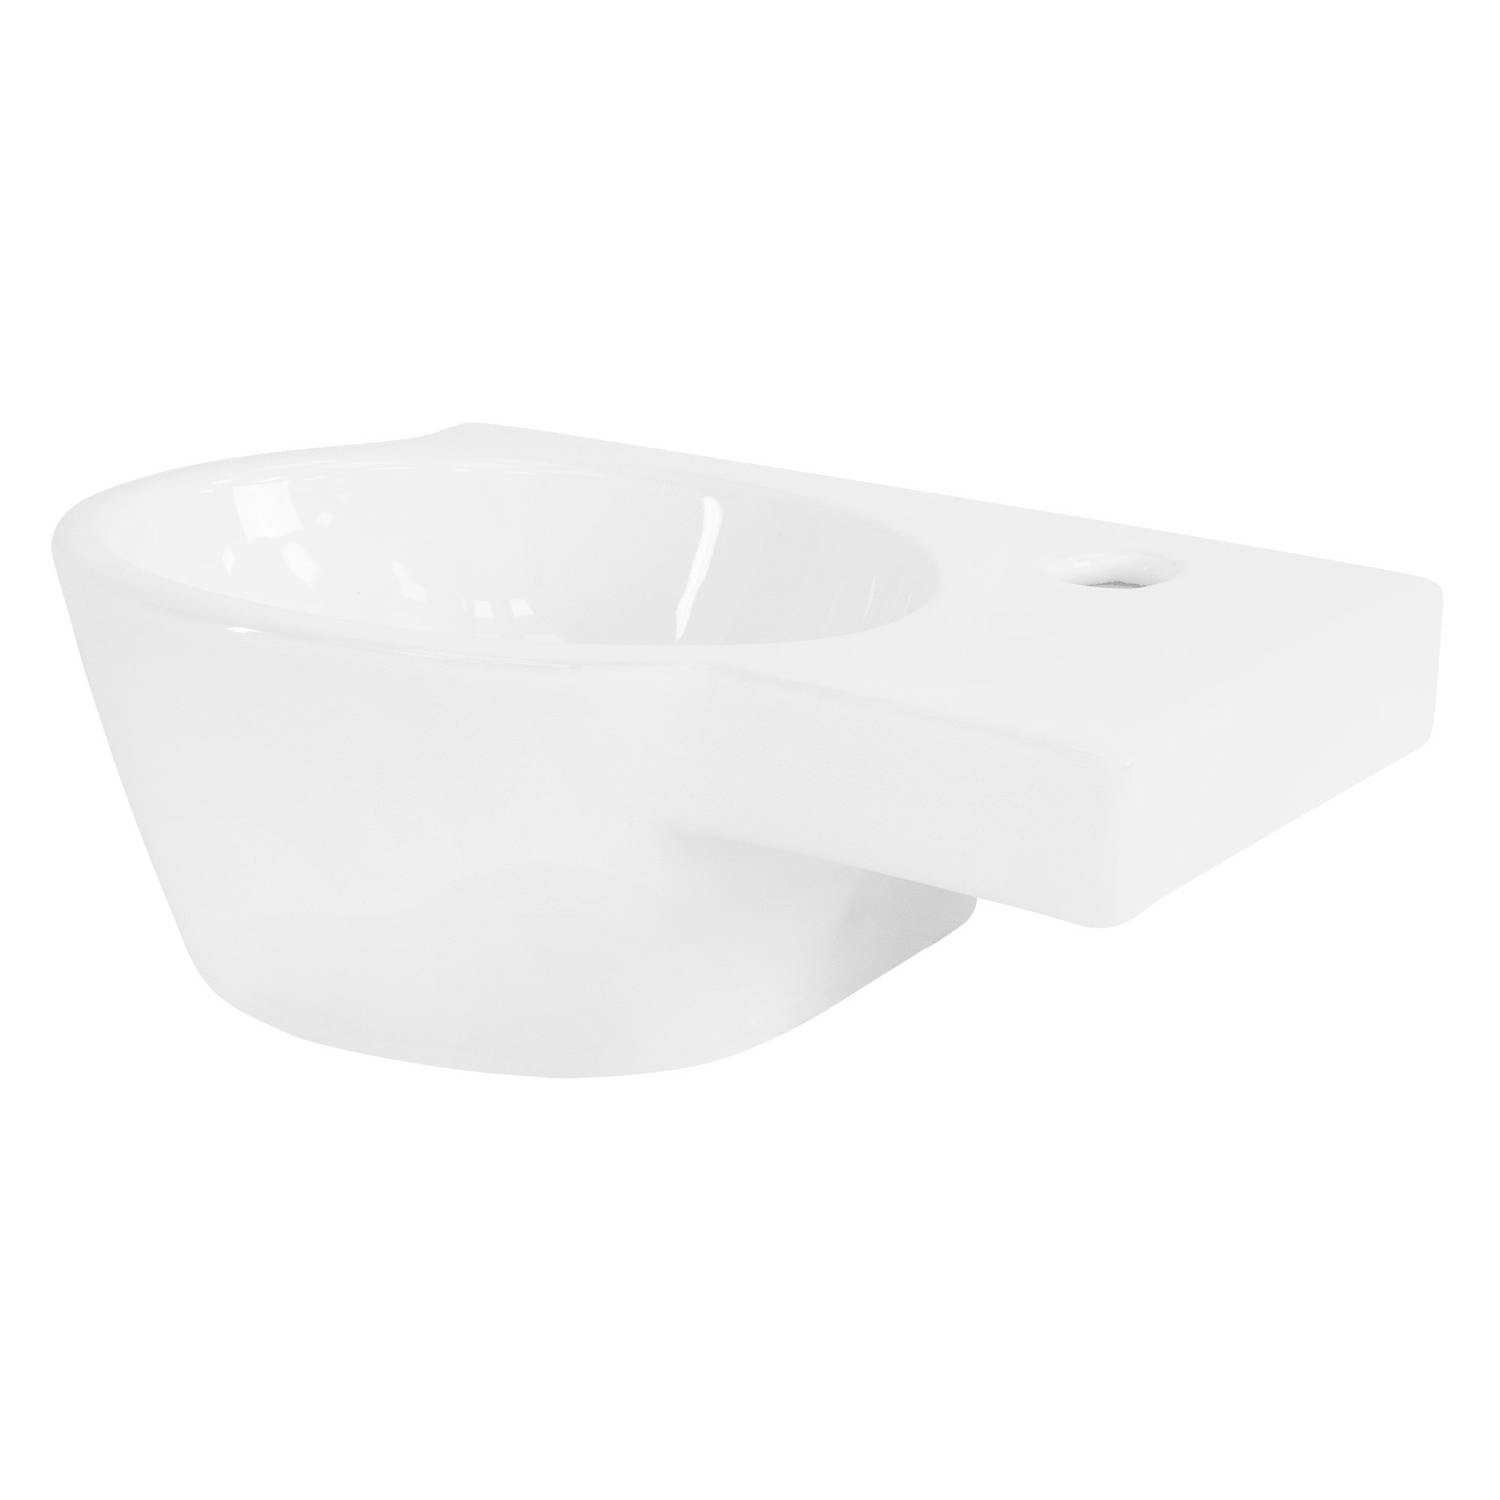 ML-Design keramische wastafel in wit, 37,5x19x14 cm, ovaal, klein, kraangat rechts, wand- of opzetwastafel, moderne wastafel waskom handwasbak, voor badkamers